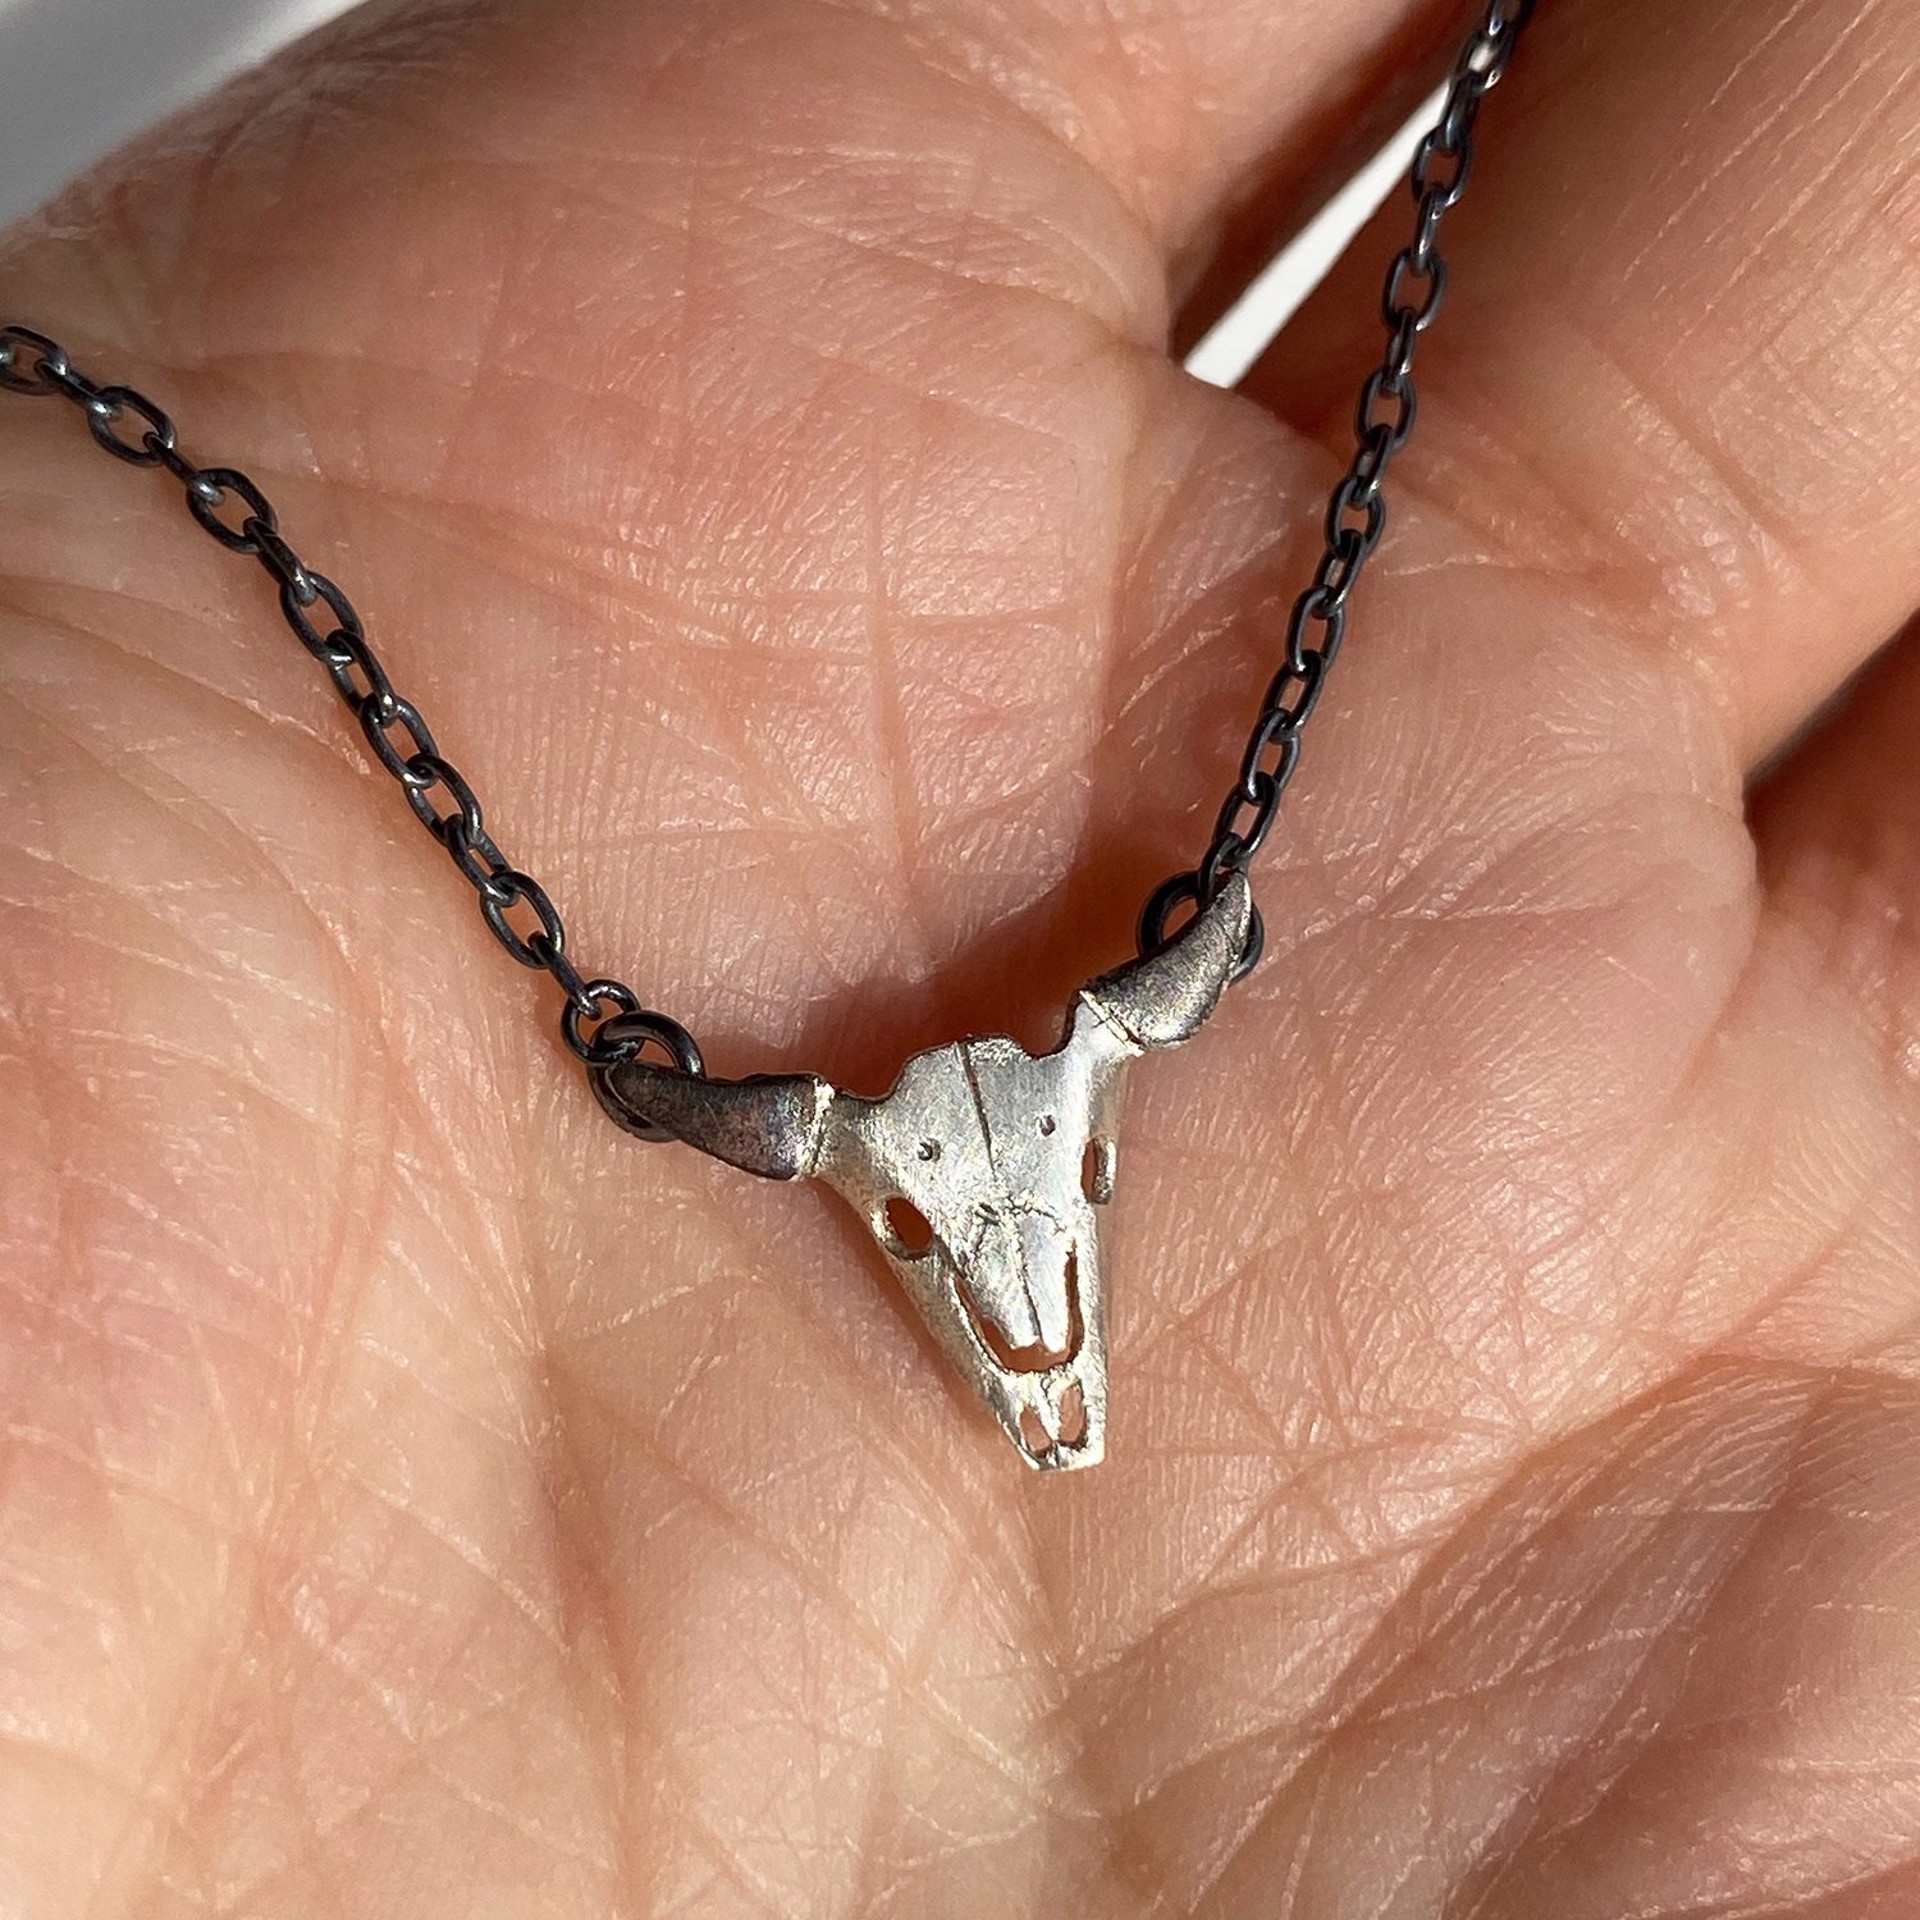 Tiny Buffalo Skull Necklace by Susan Elnora